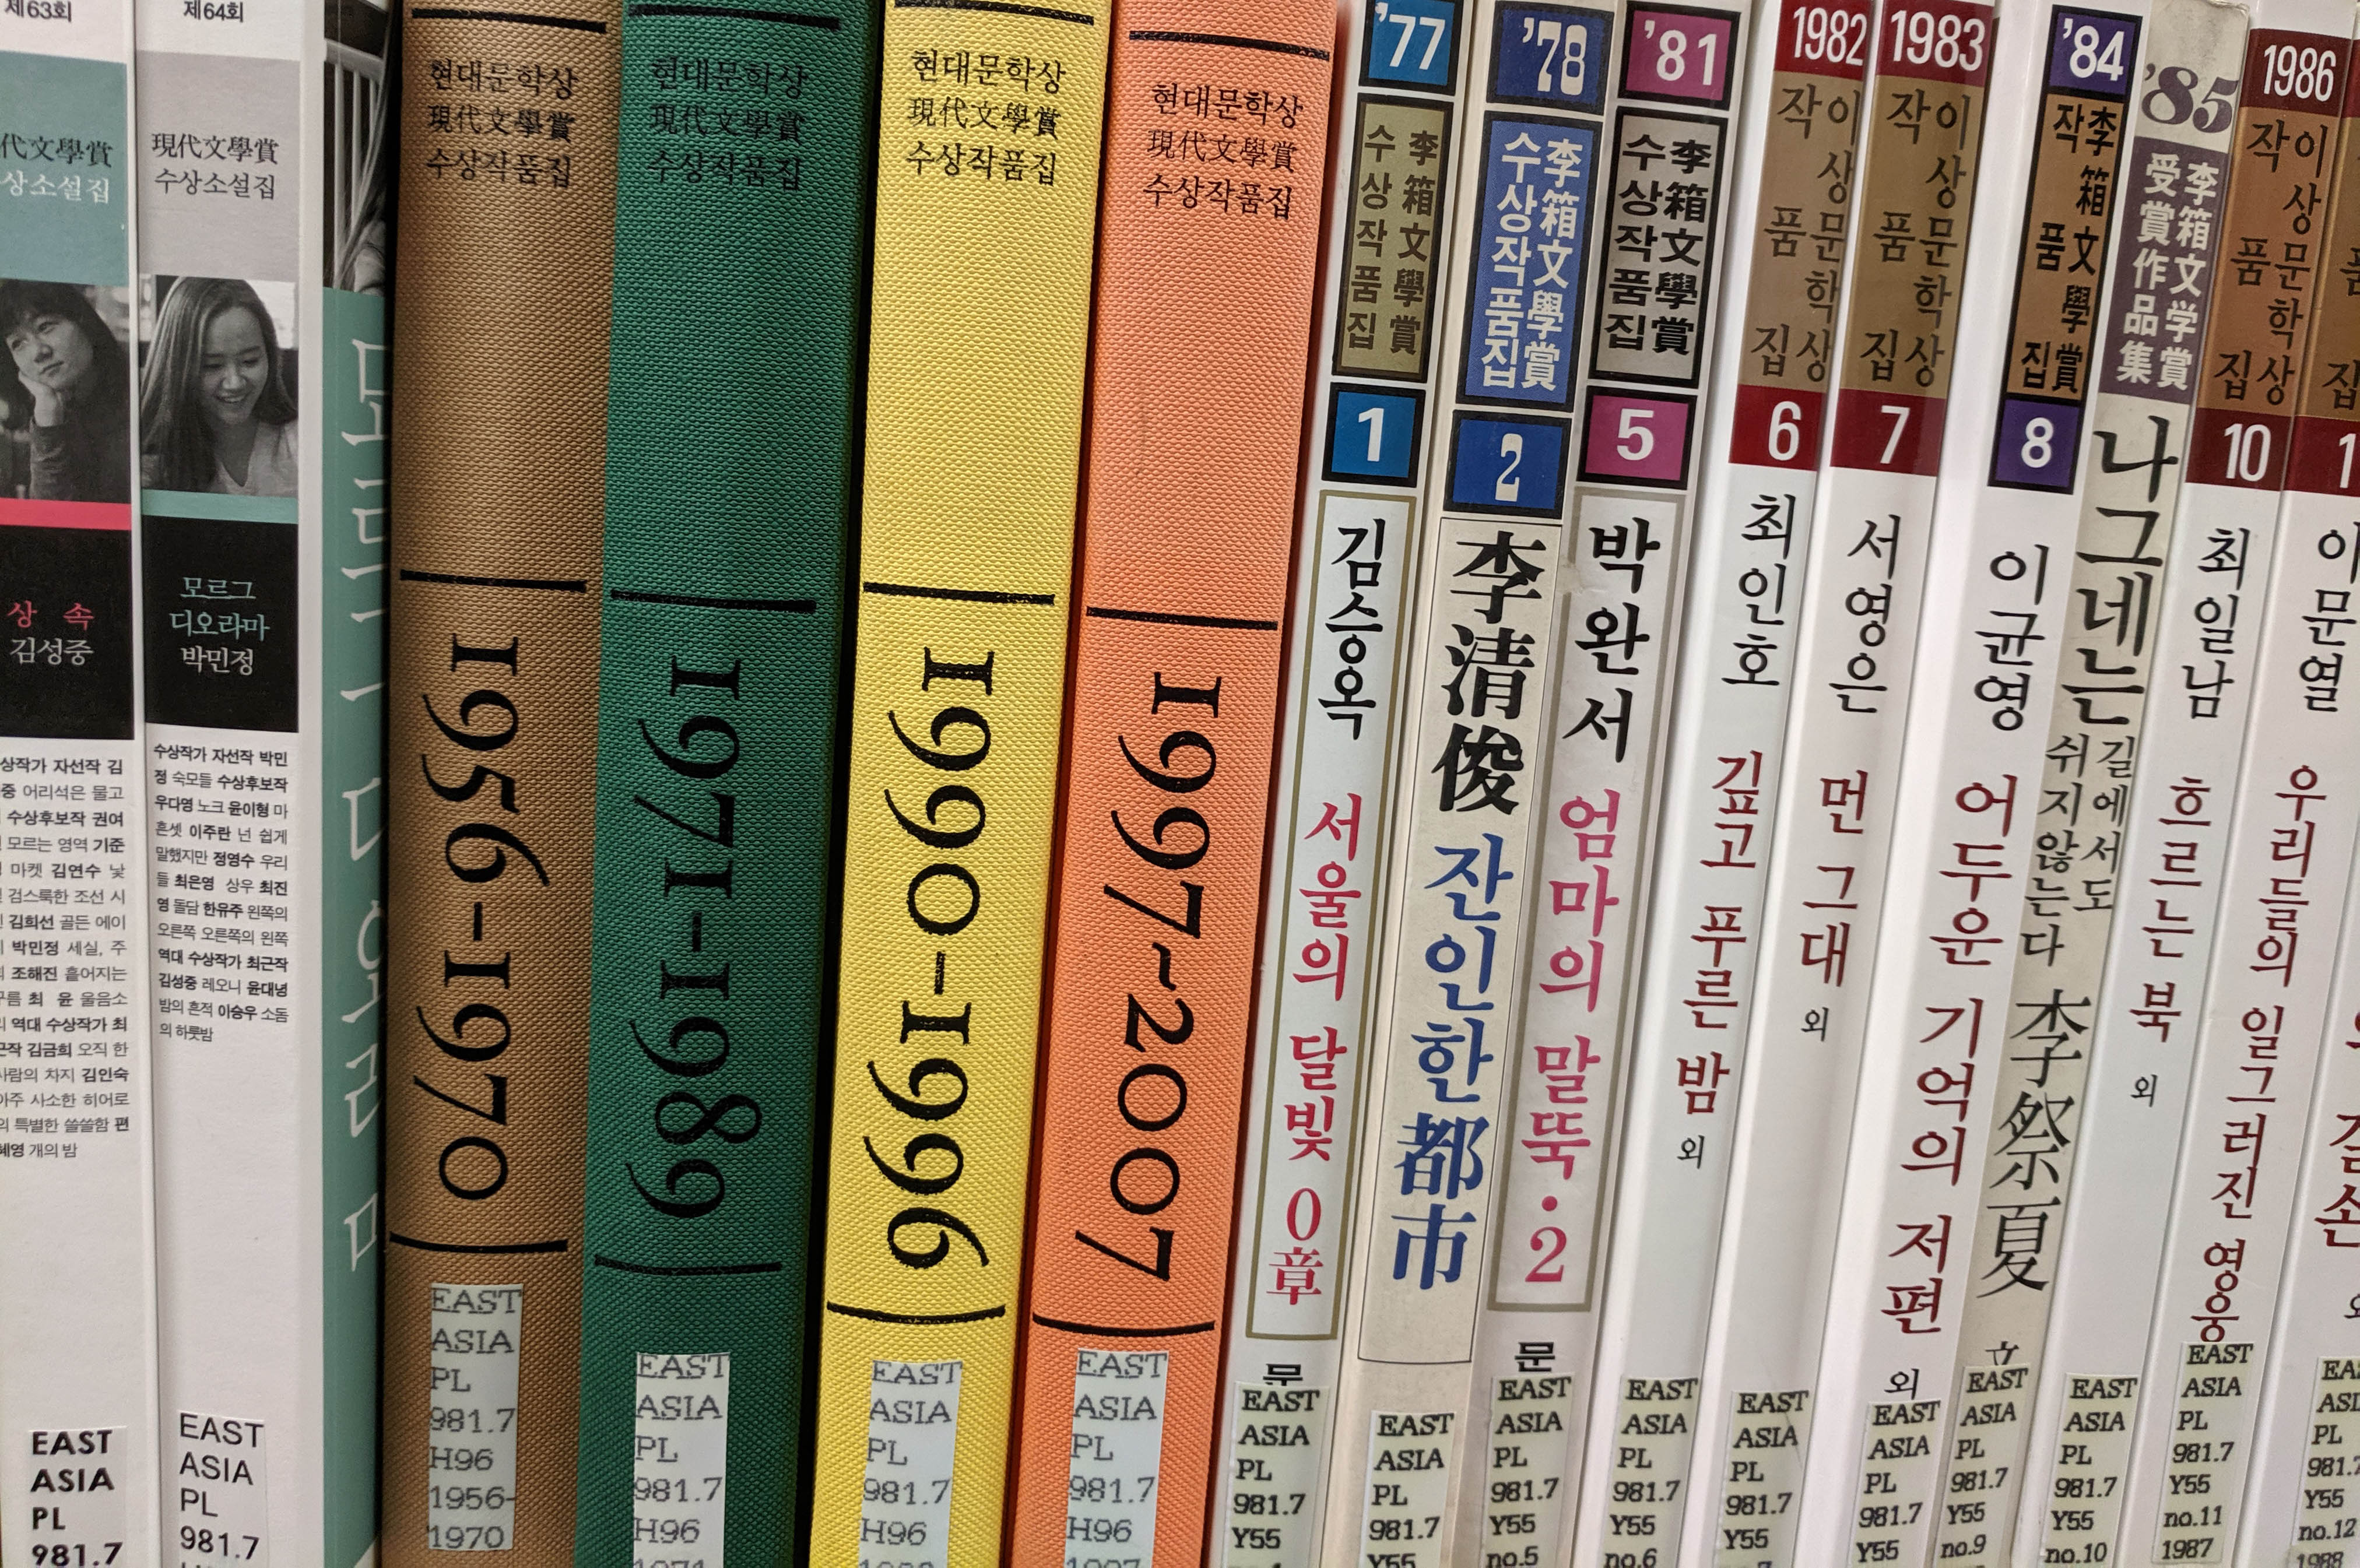 Korean fiction